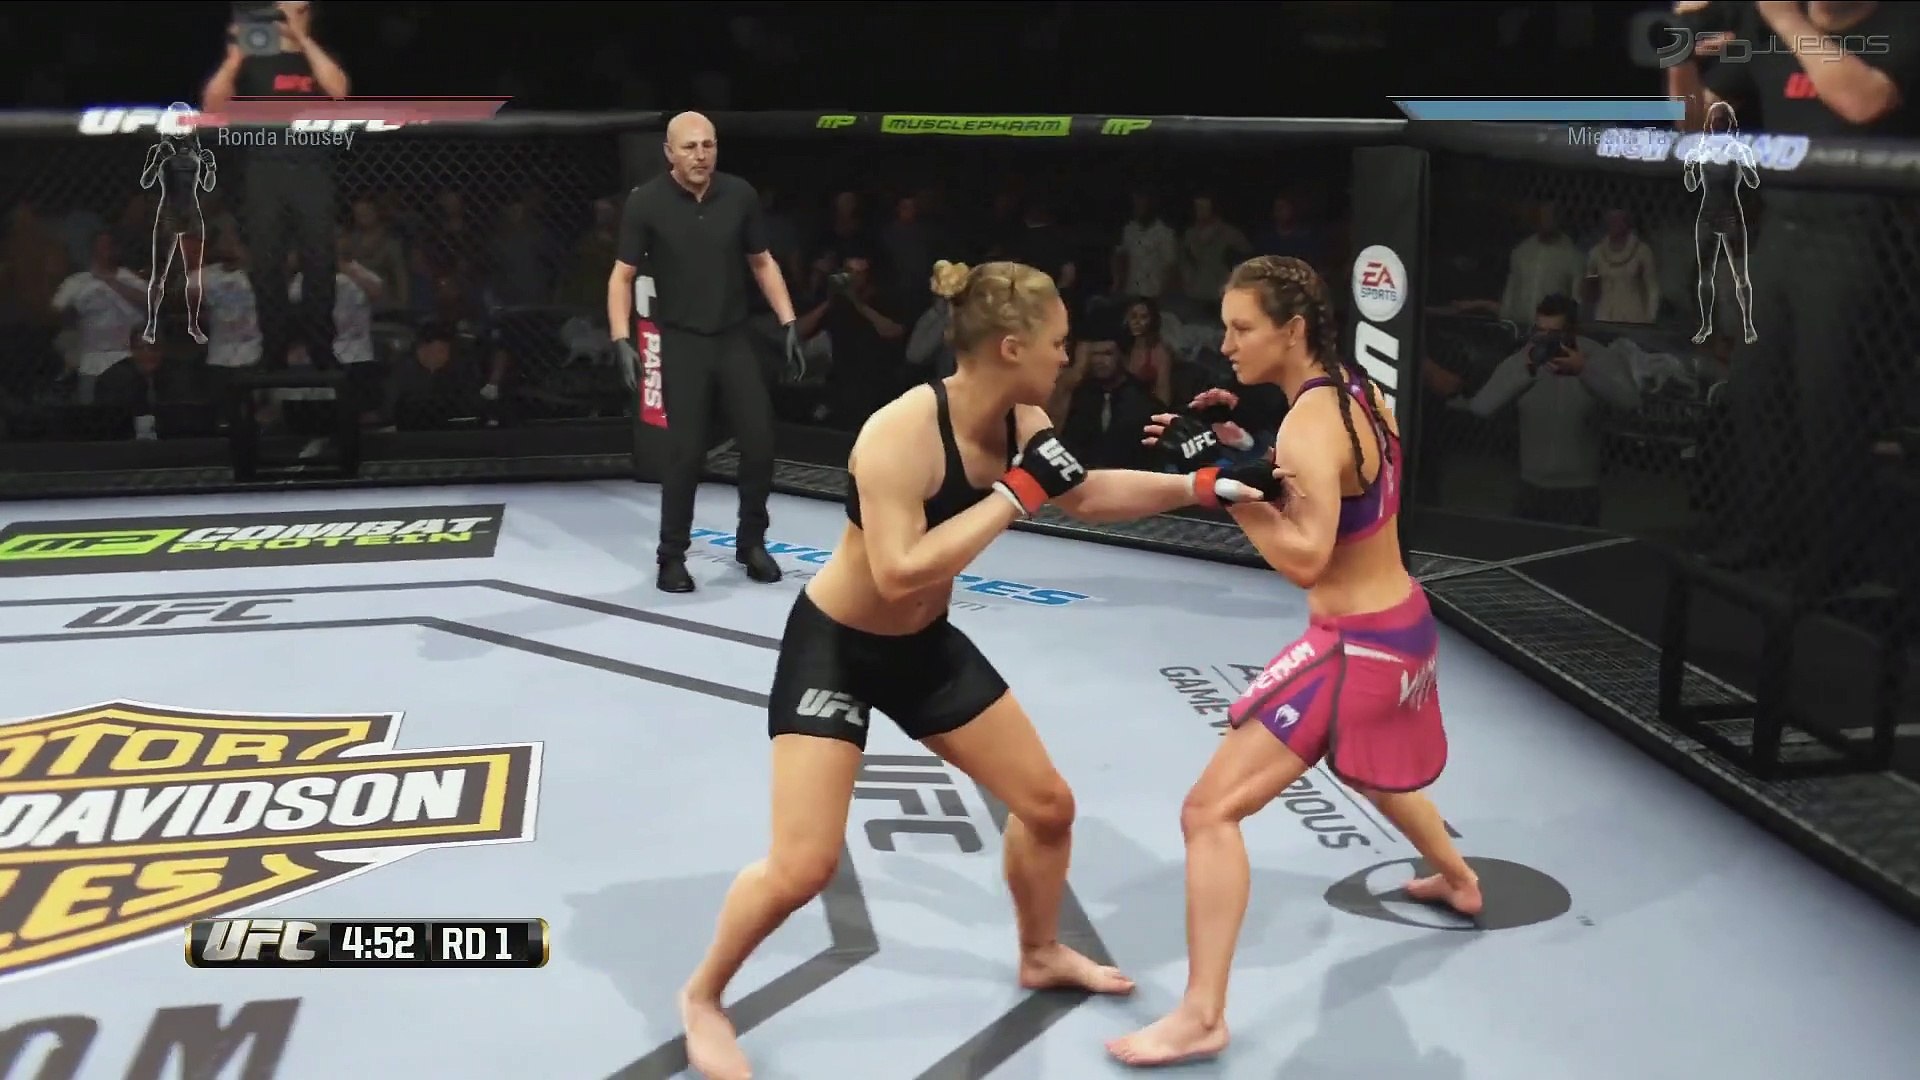 UFC: Ronda Rousey vs. Miesha Tate - Vídeo Dailymotion